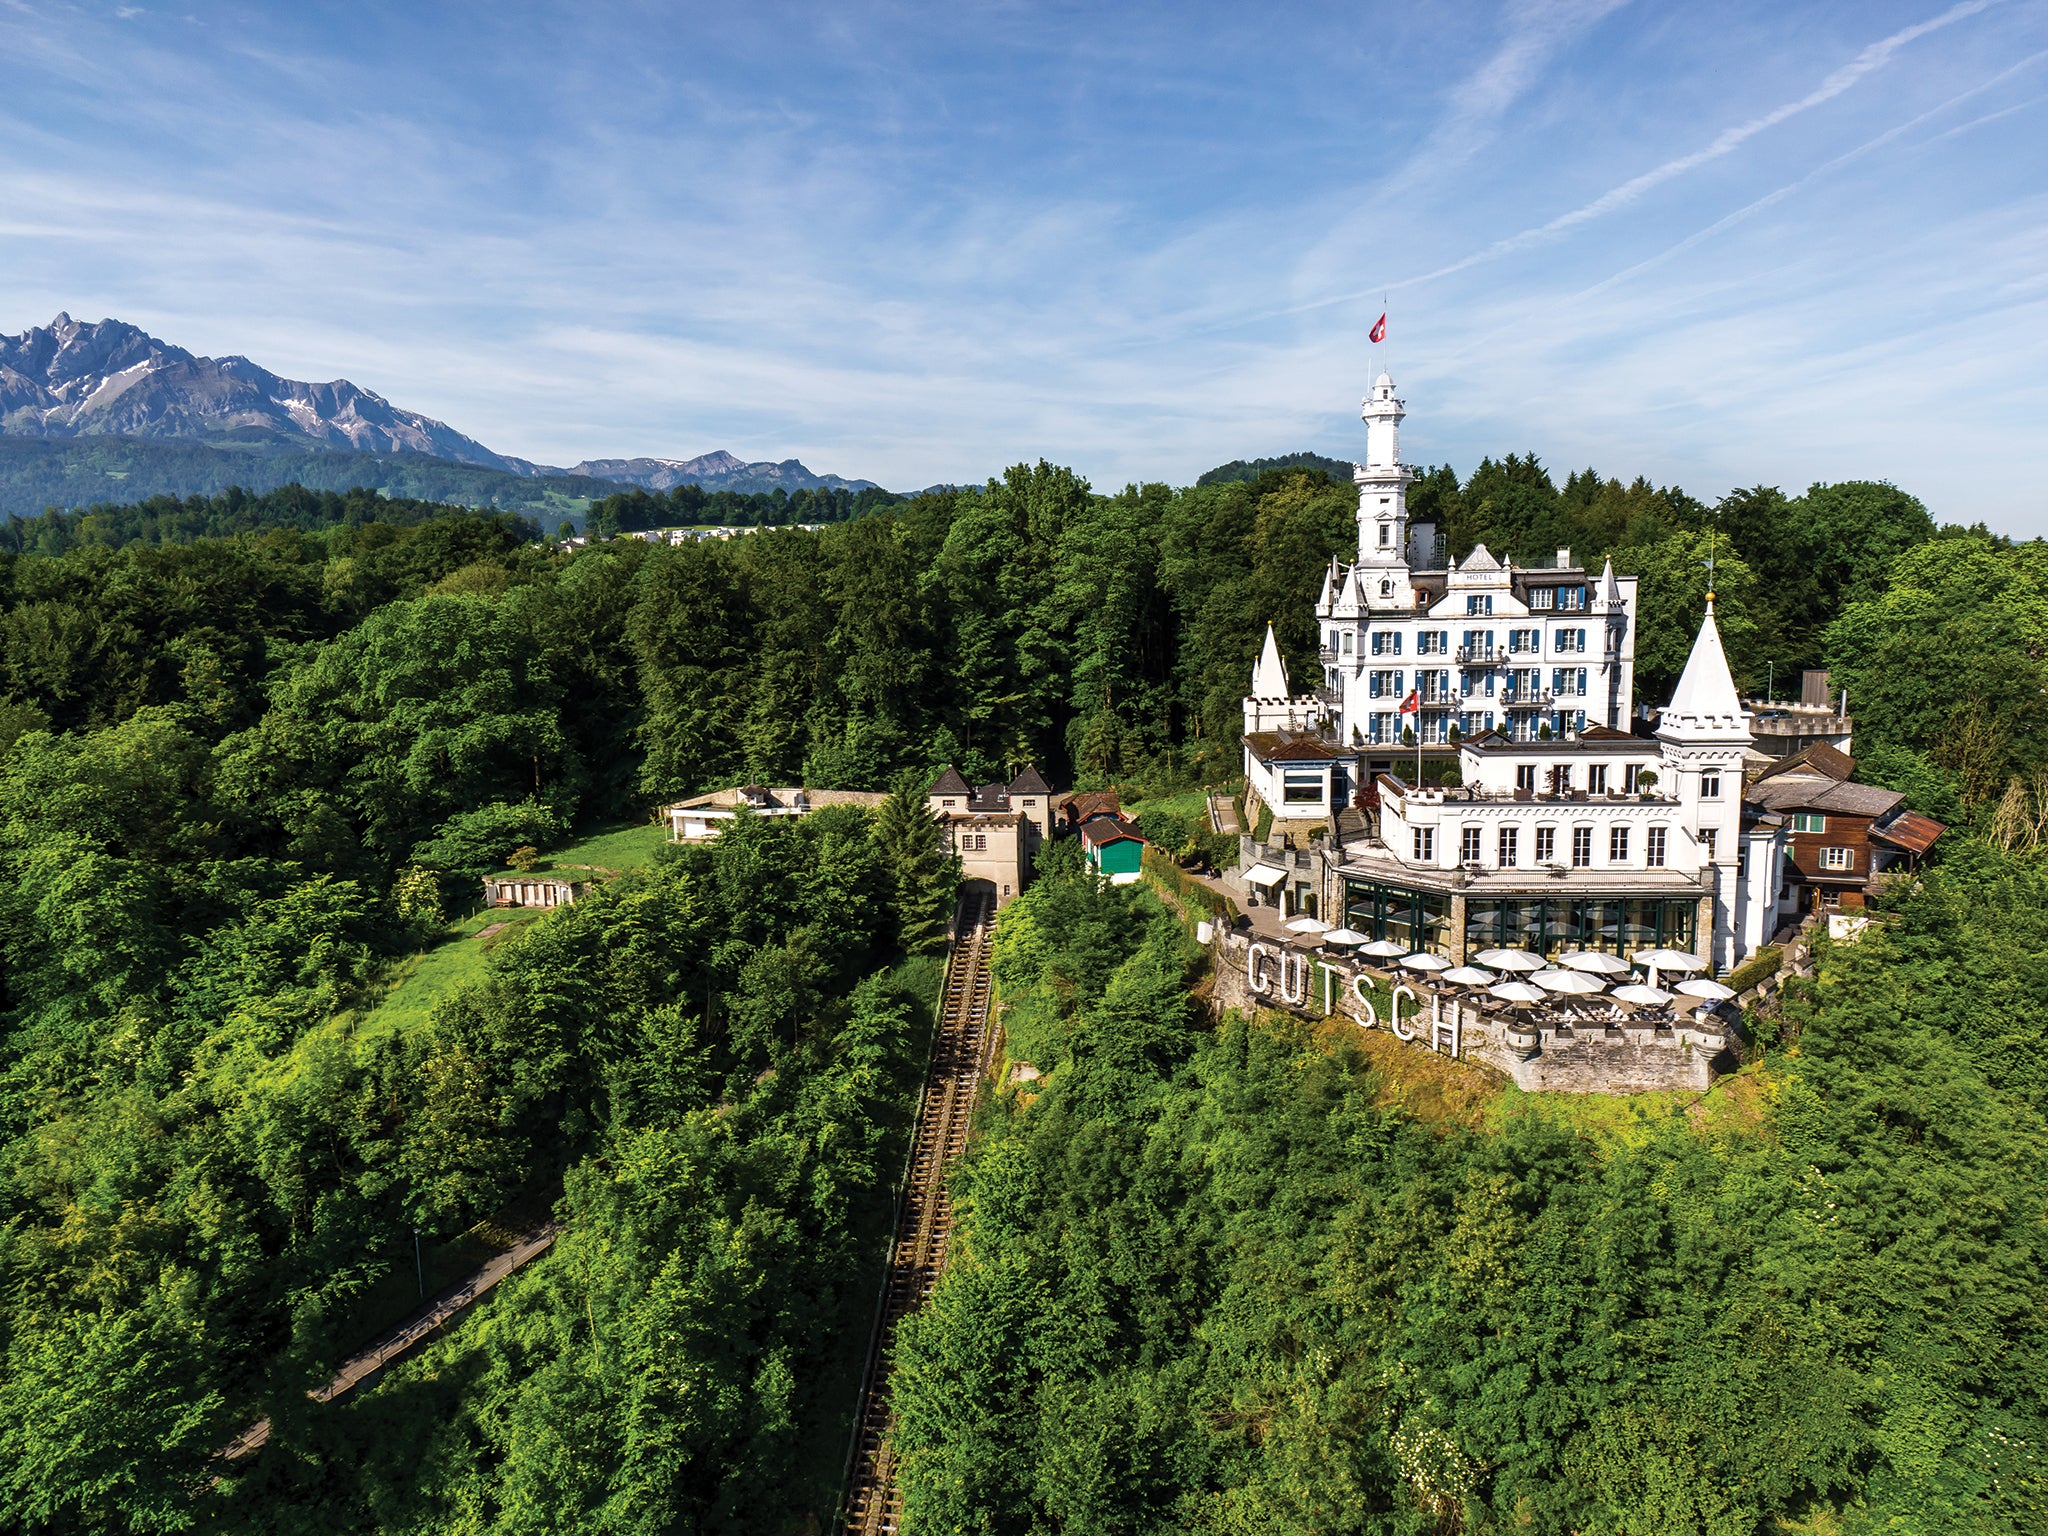 Château Gütsch, a stunning hotel overlooking the historic city of Lucerne